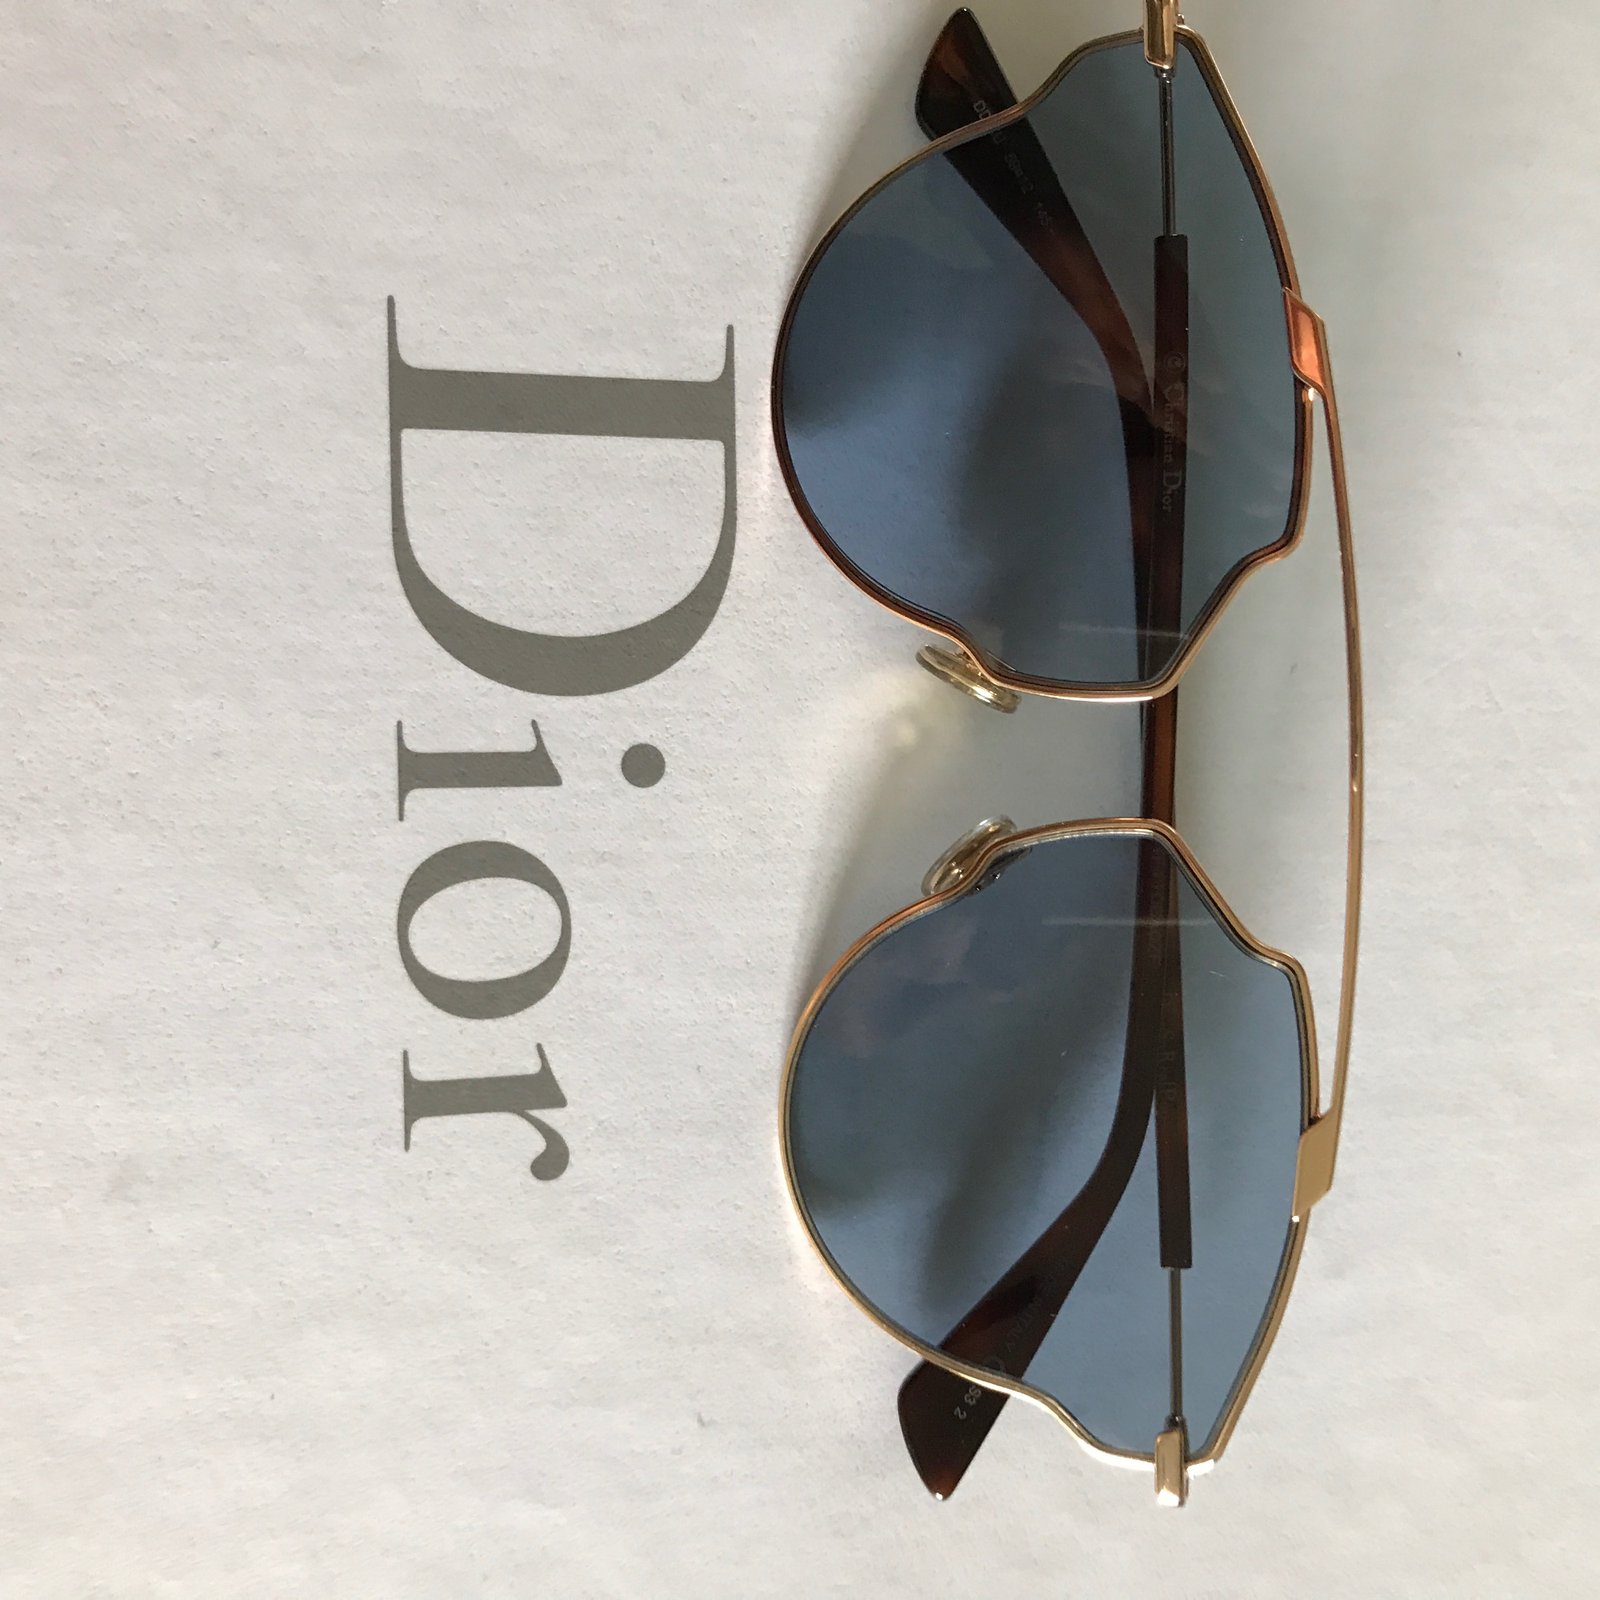 dior so real sunglasses blue